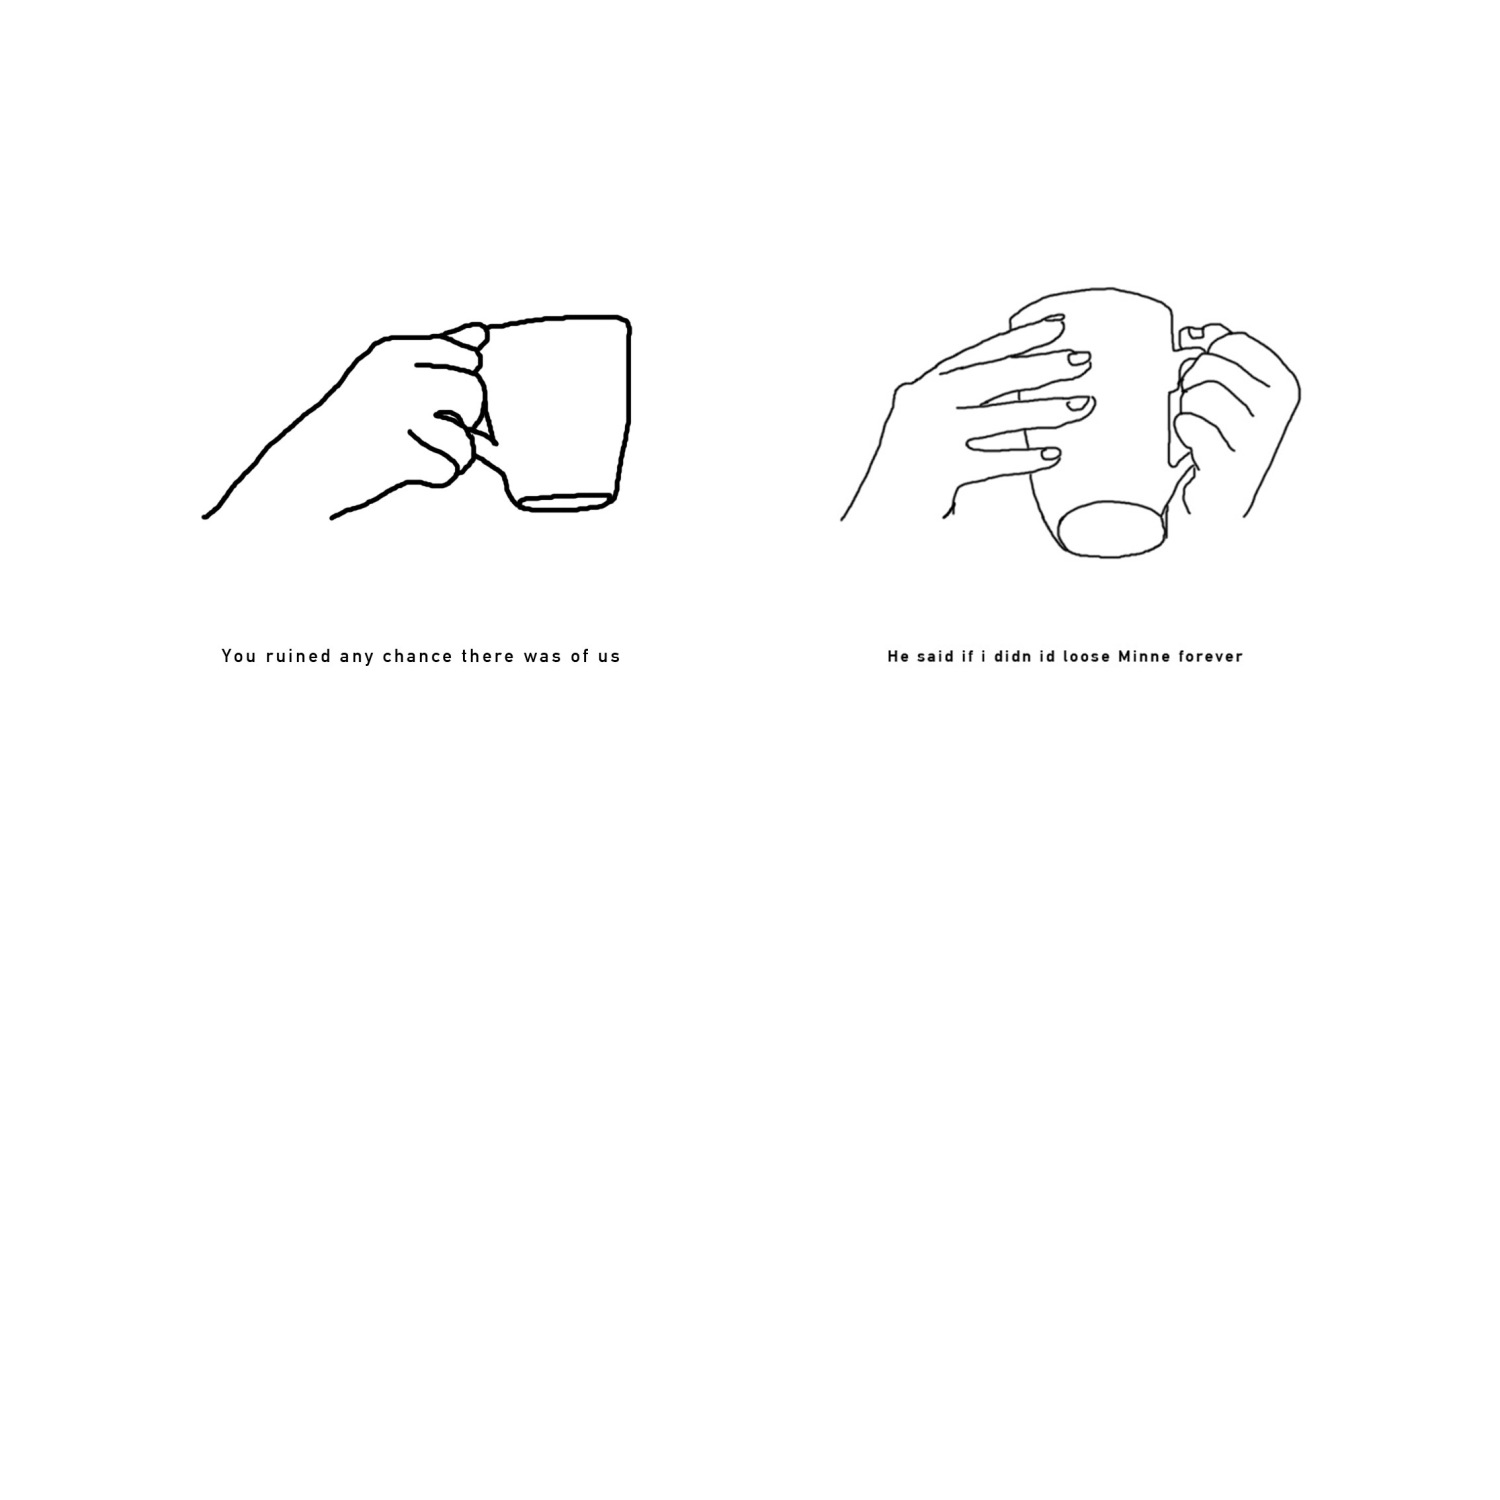 Sign-language of tea | Making Meaning